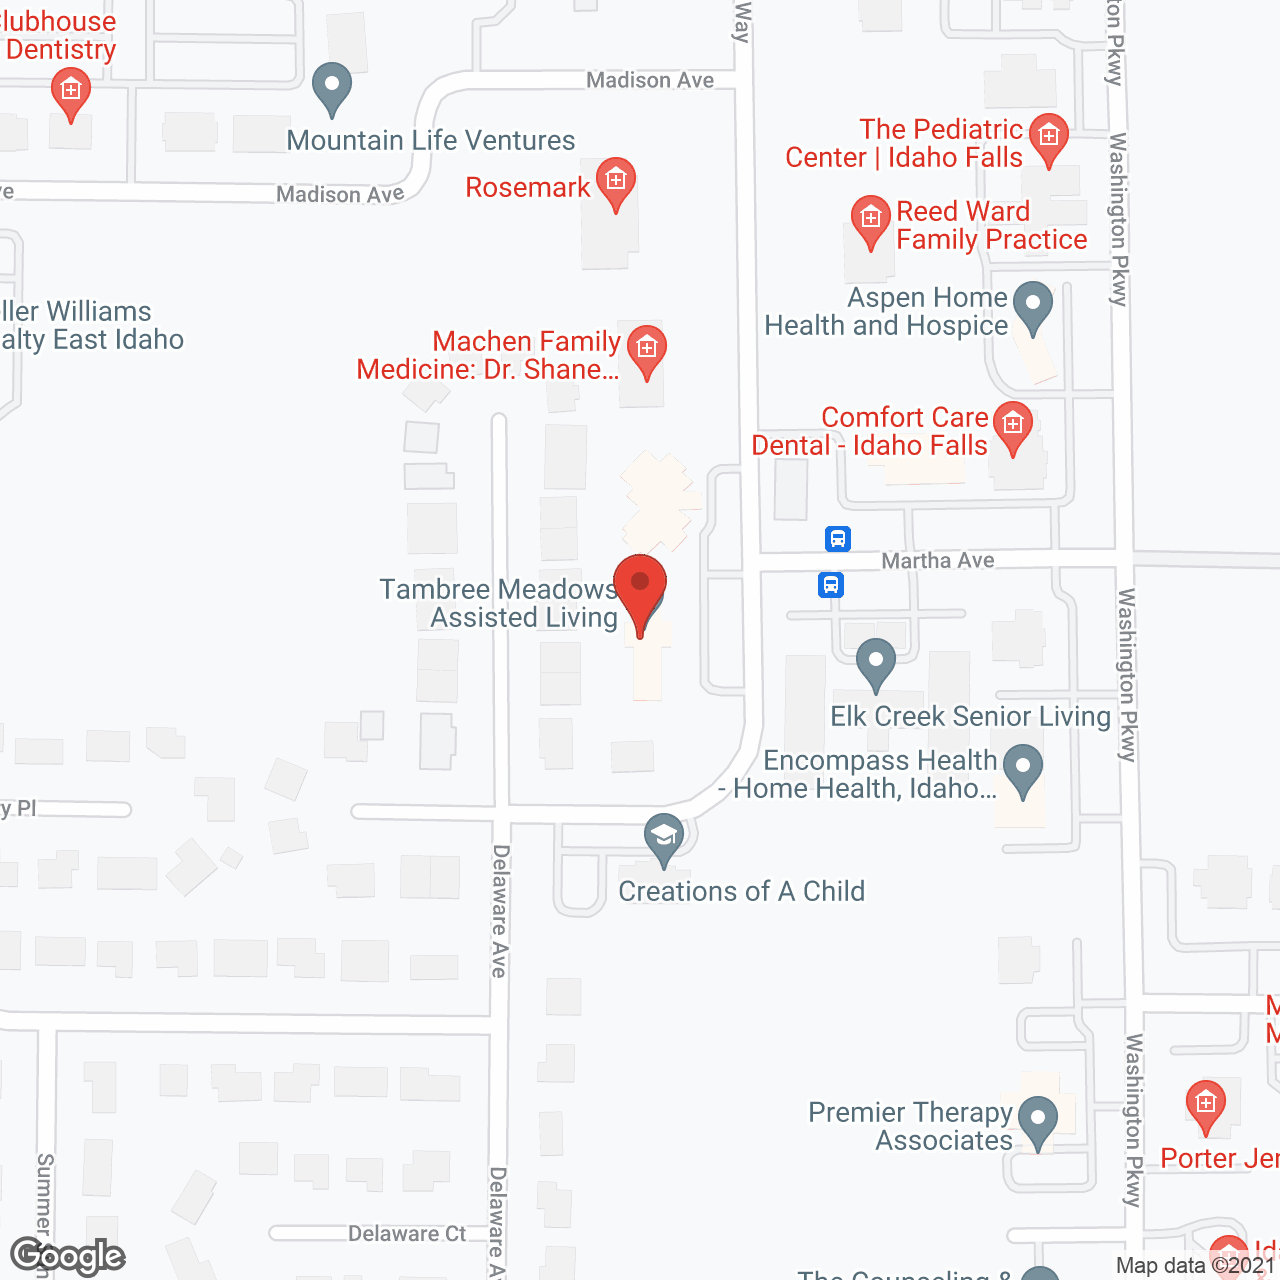 Tambree Meadows in google map